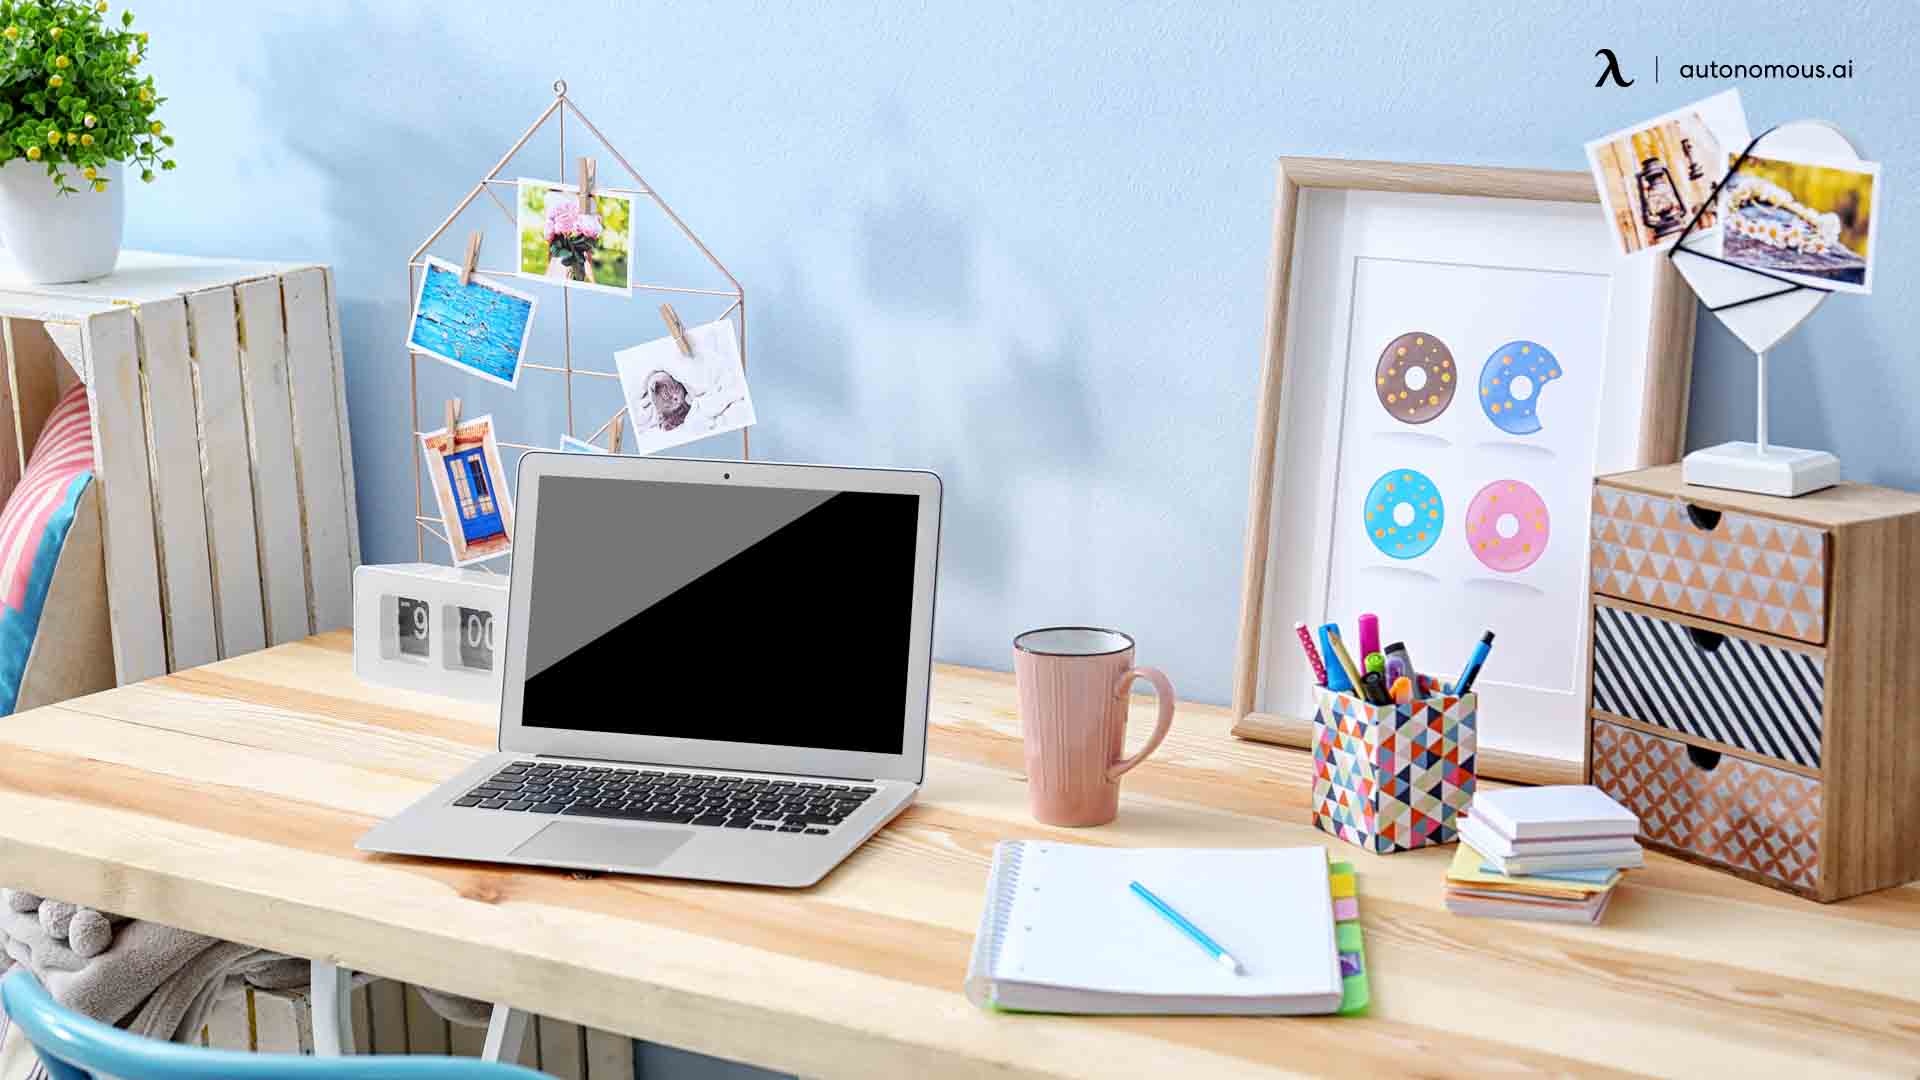 10 Cheap Work Desk Decoration Ideas for Making Work Fun